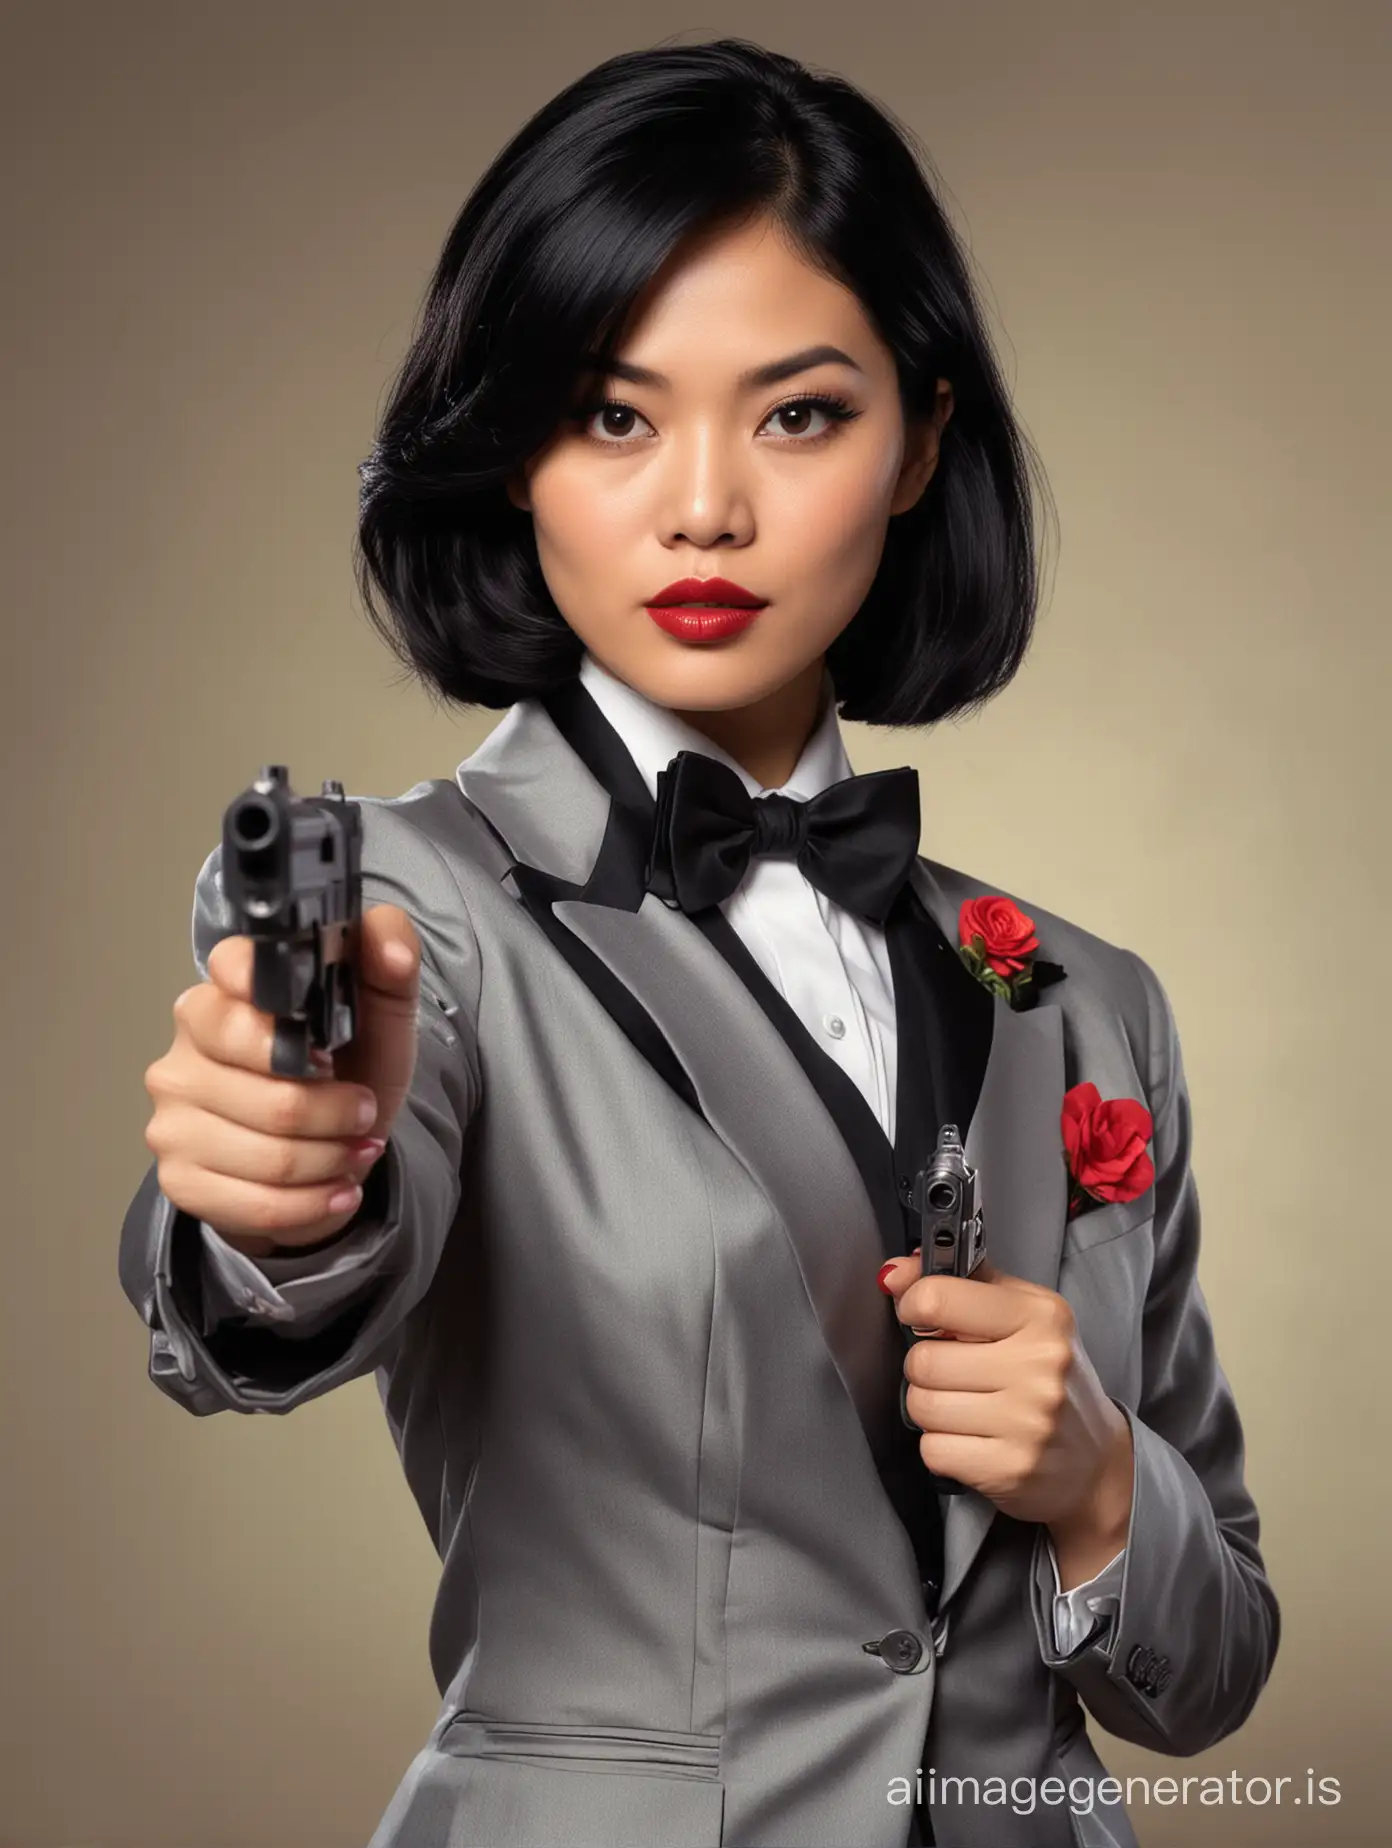 Elegant-Vietnamese-Spy-in-Tuxedo-with-Gun-and-Corsage